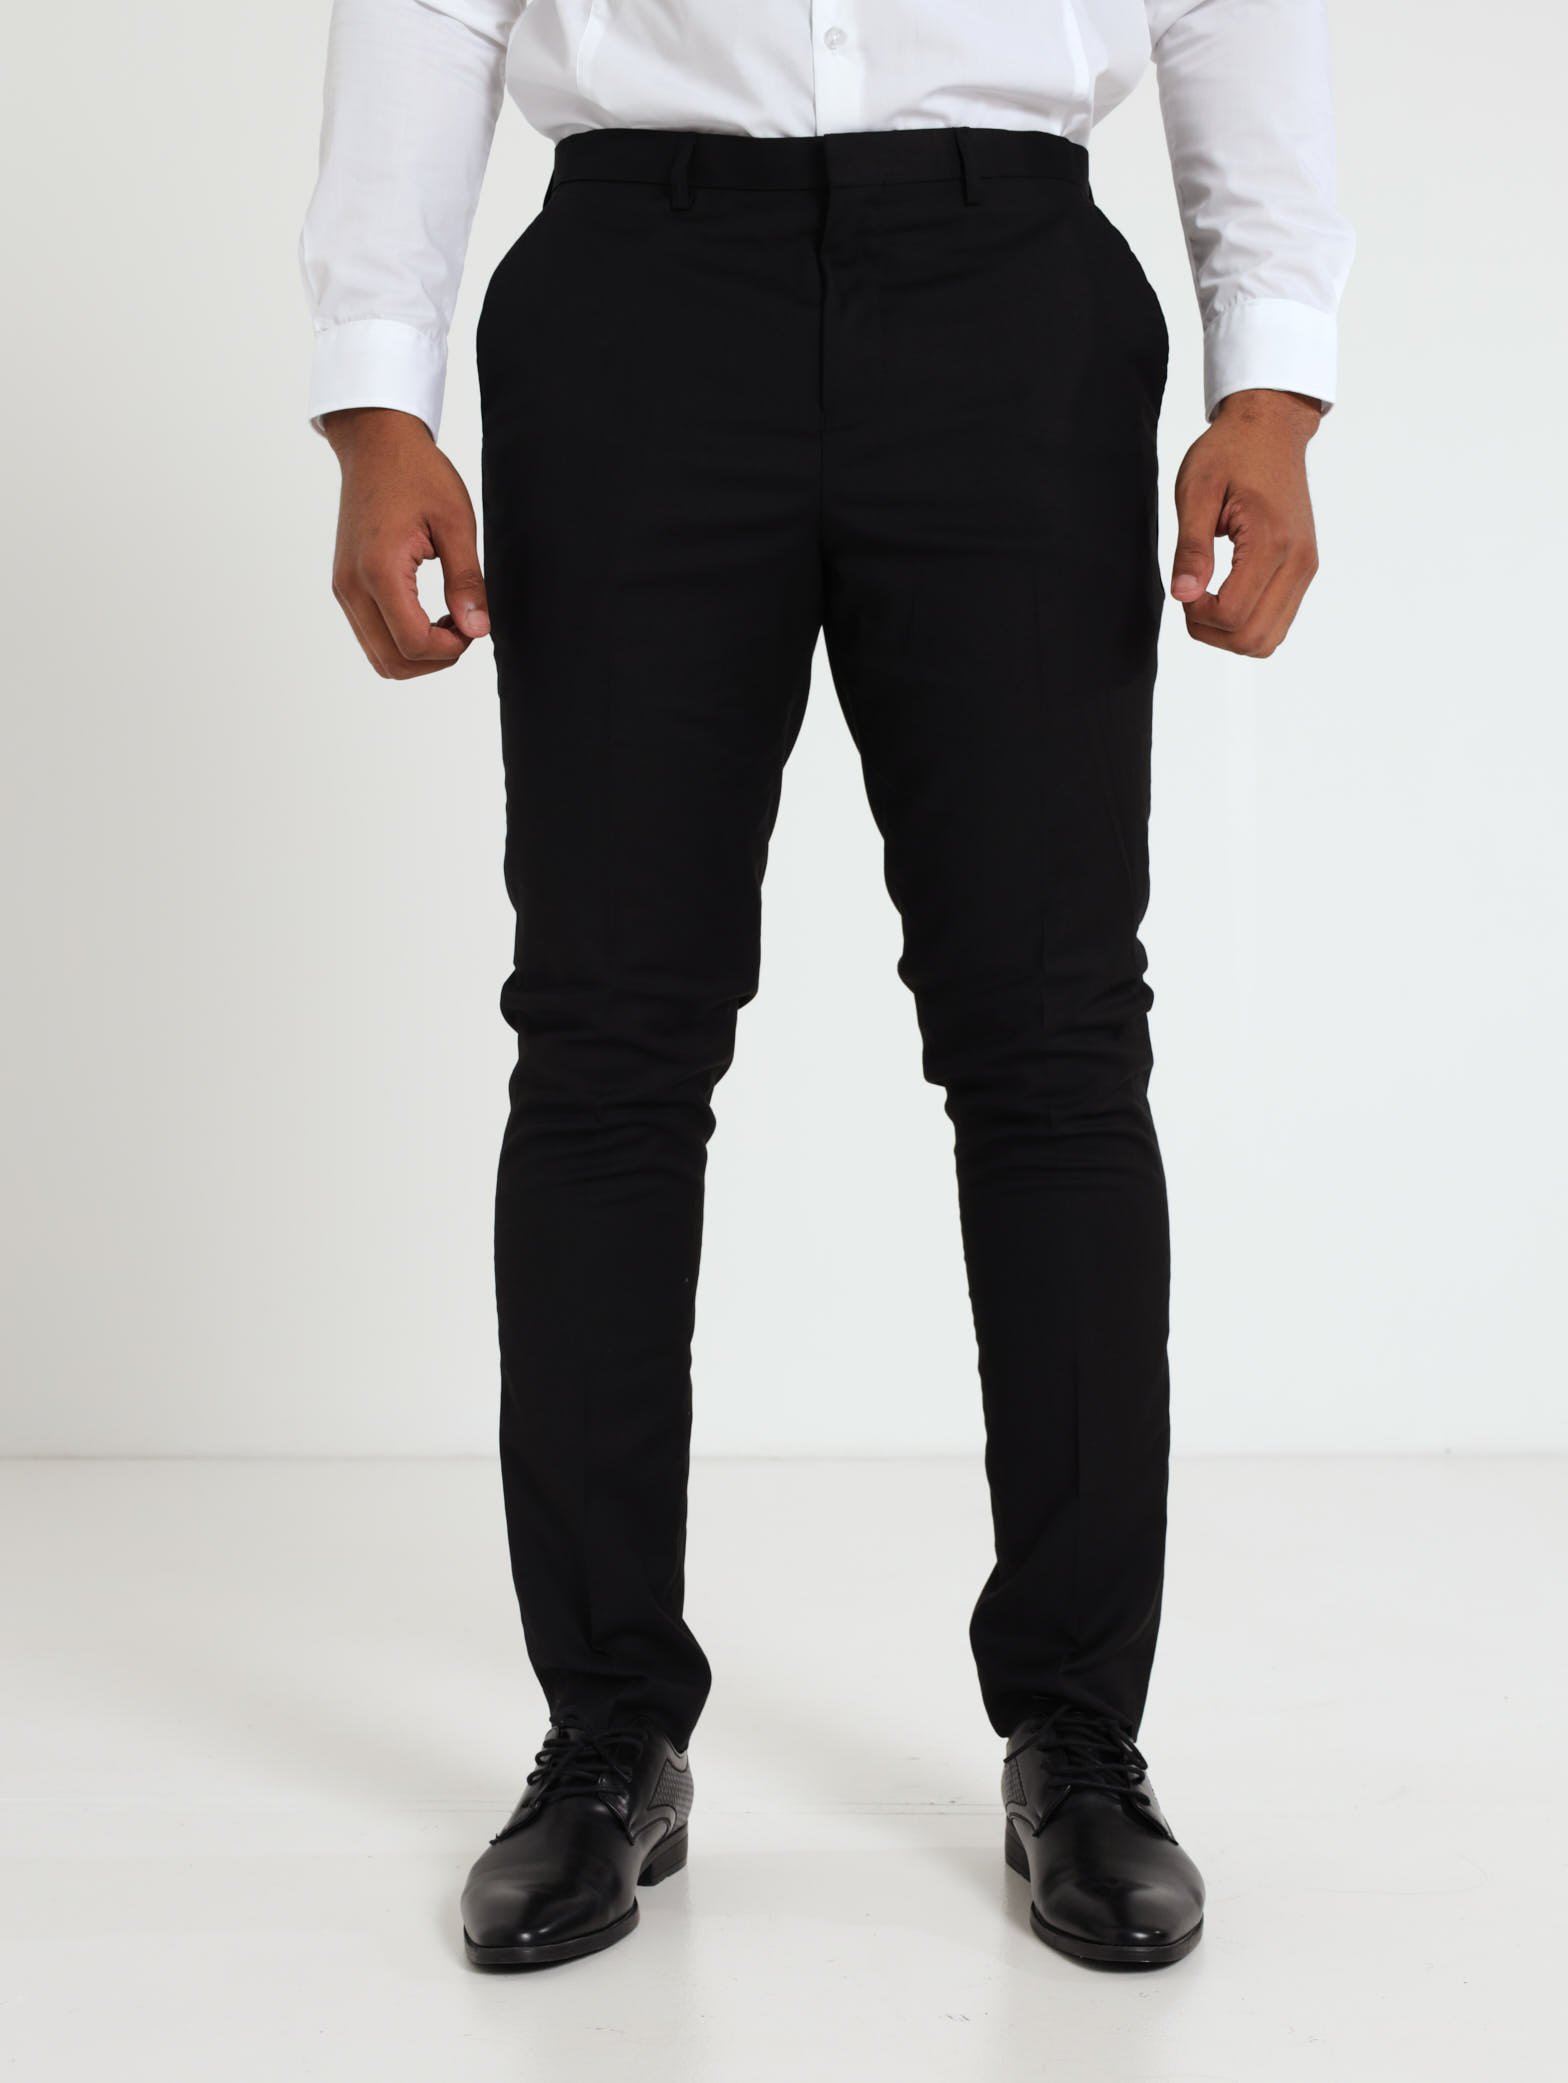 Mens Fashion Casual Skinny Plaid Business Trousers Stylish Formal Dress  Pants | eBay